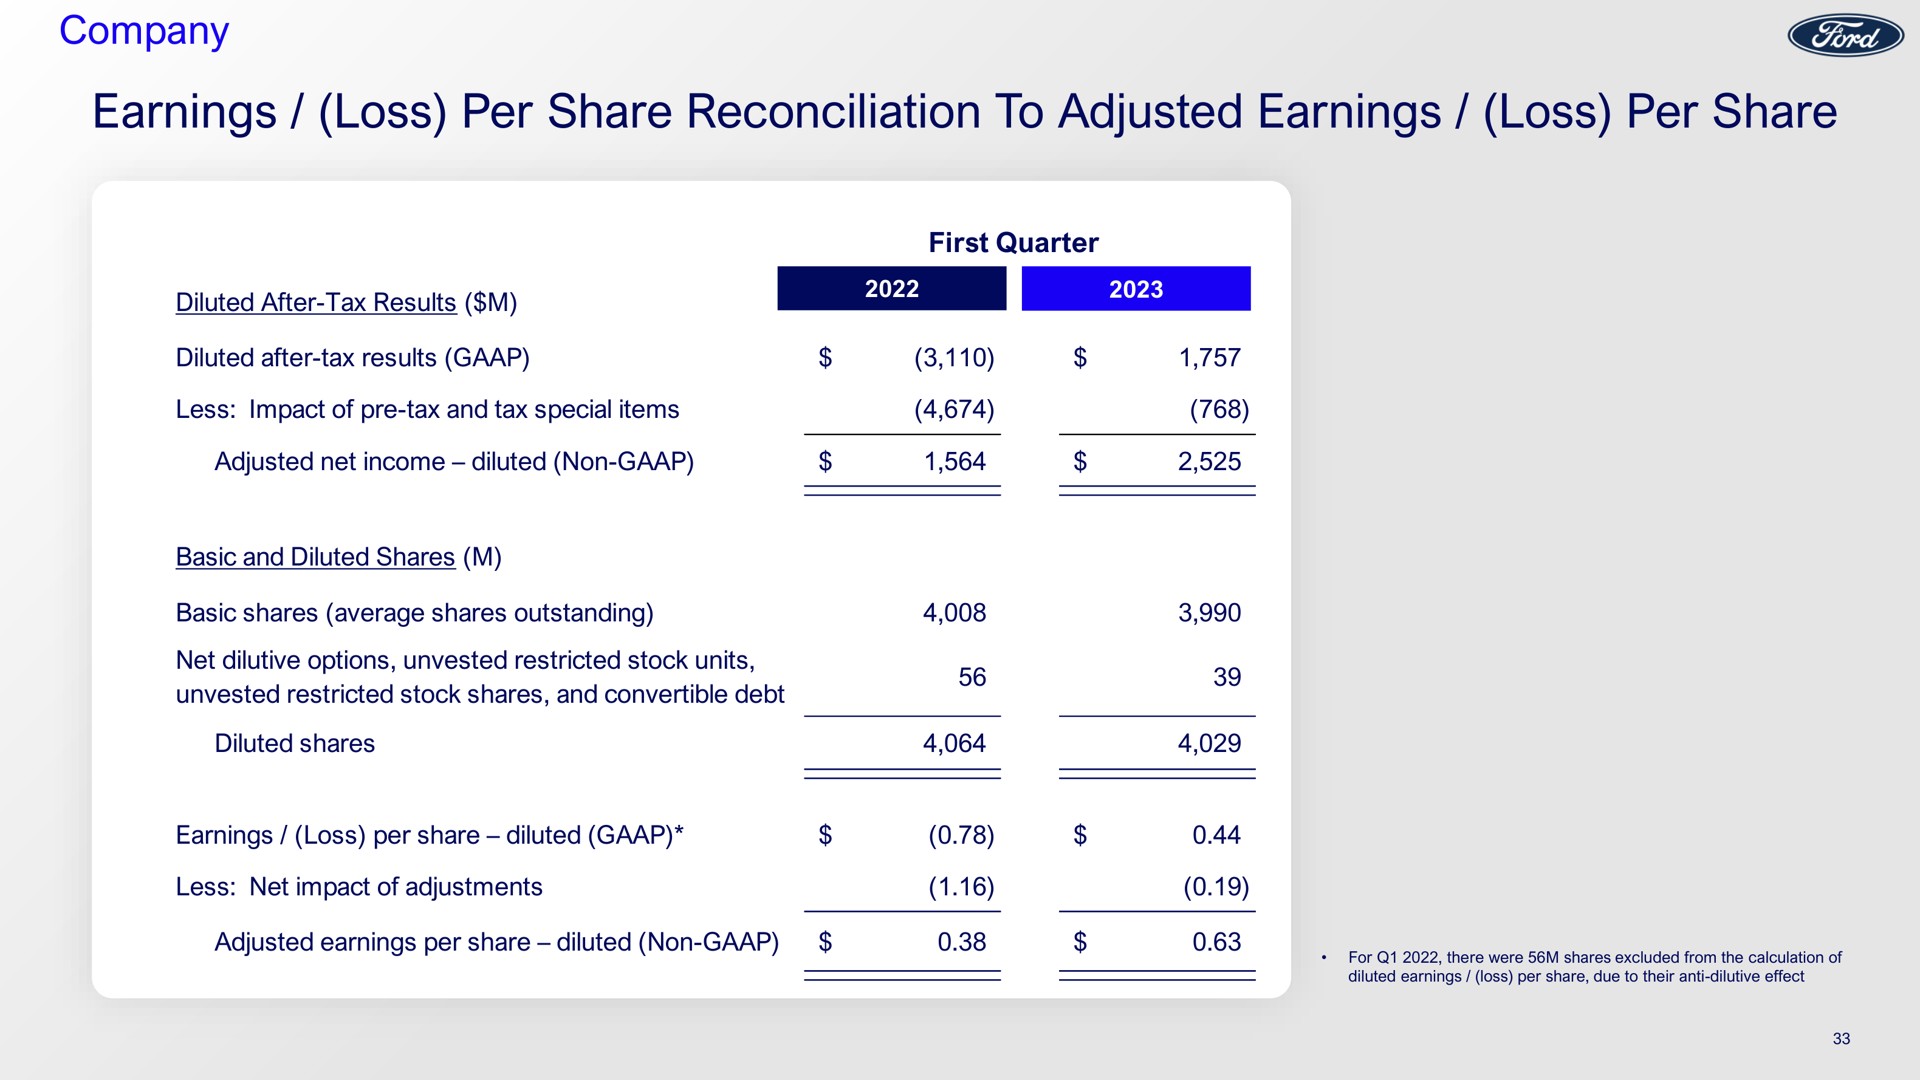 company earnings loss per share reconciliation to adjusted earnings loss per share | Ford Credit